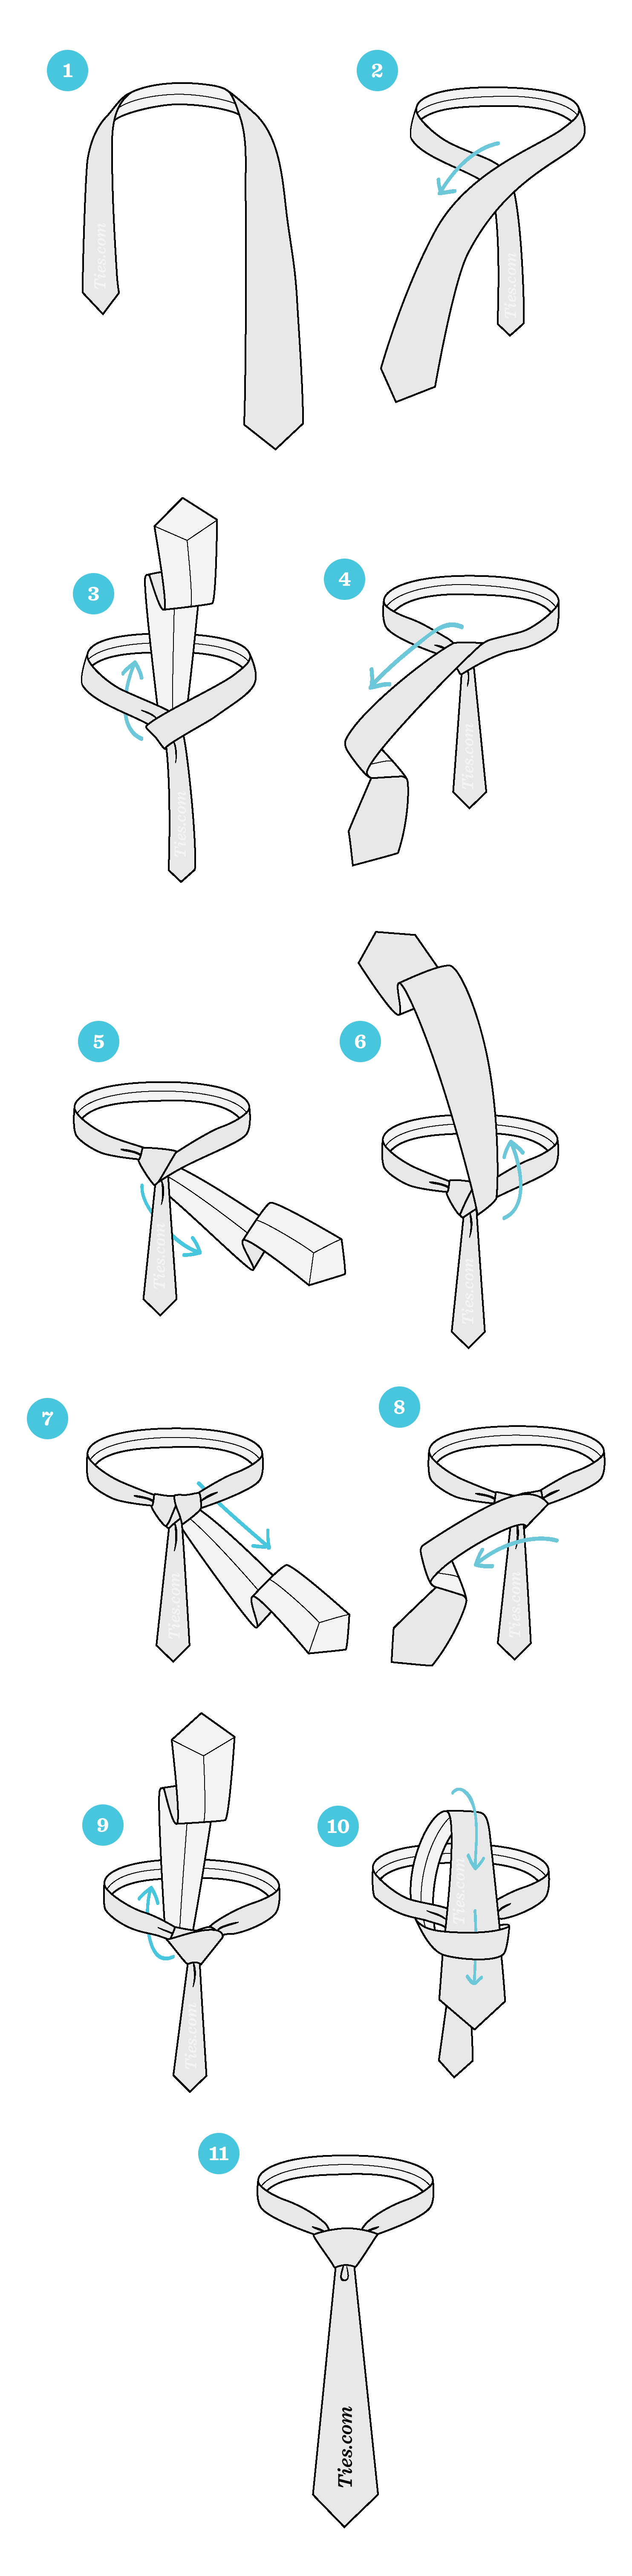 How To Put Tie Knot - Cronoset